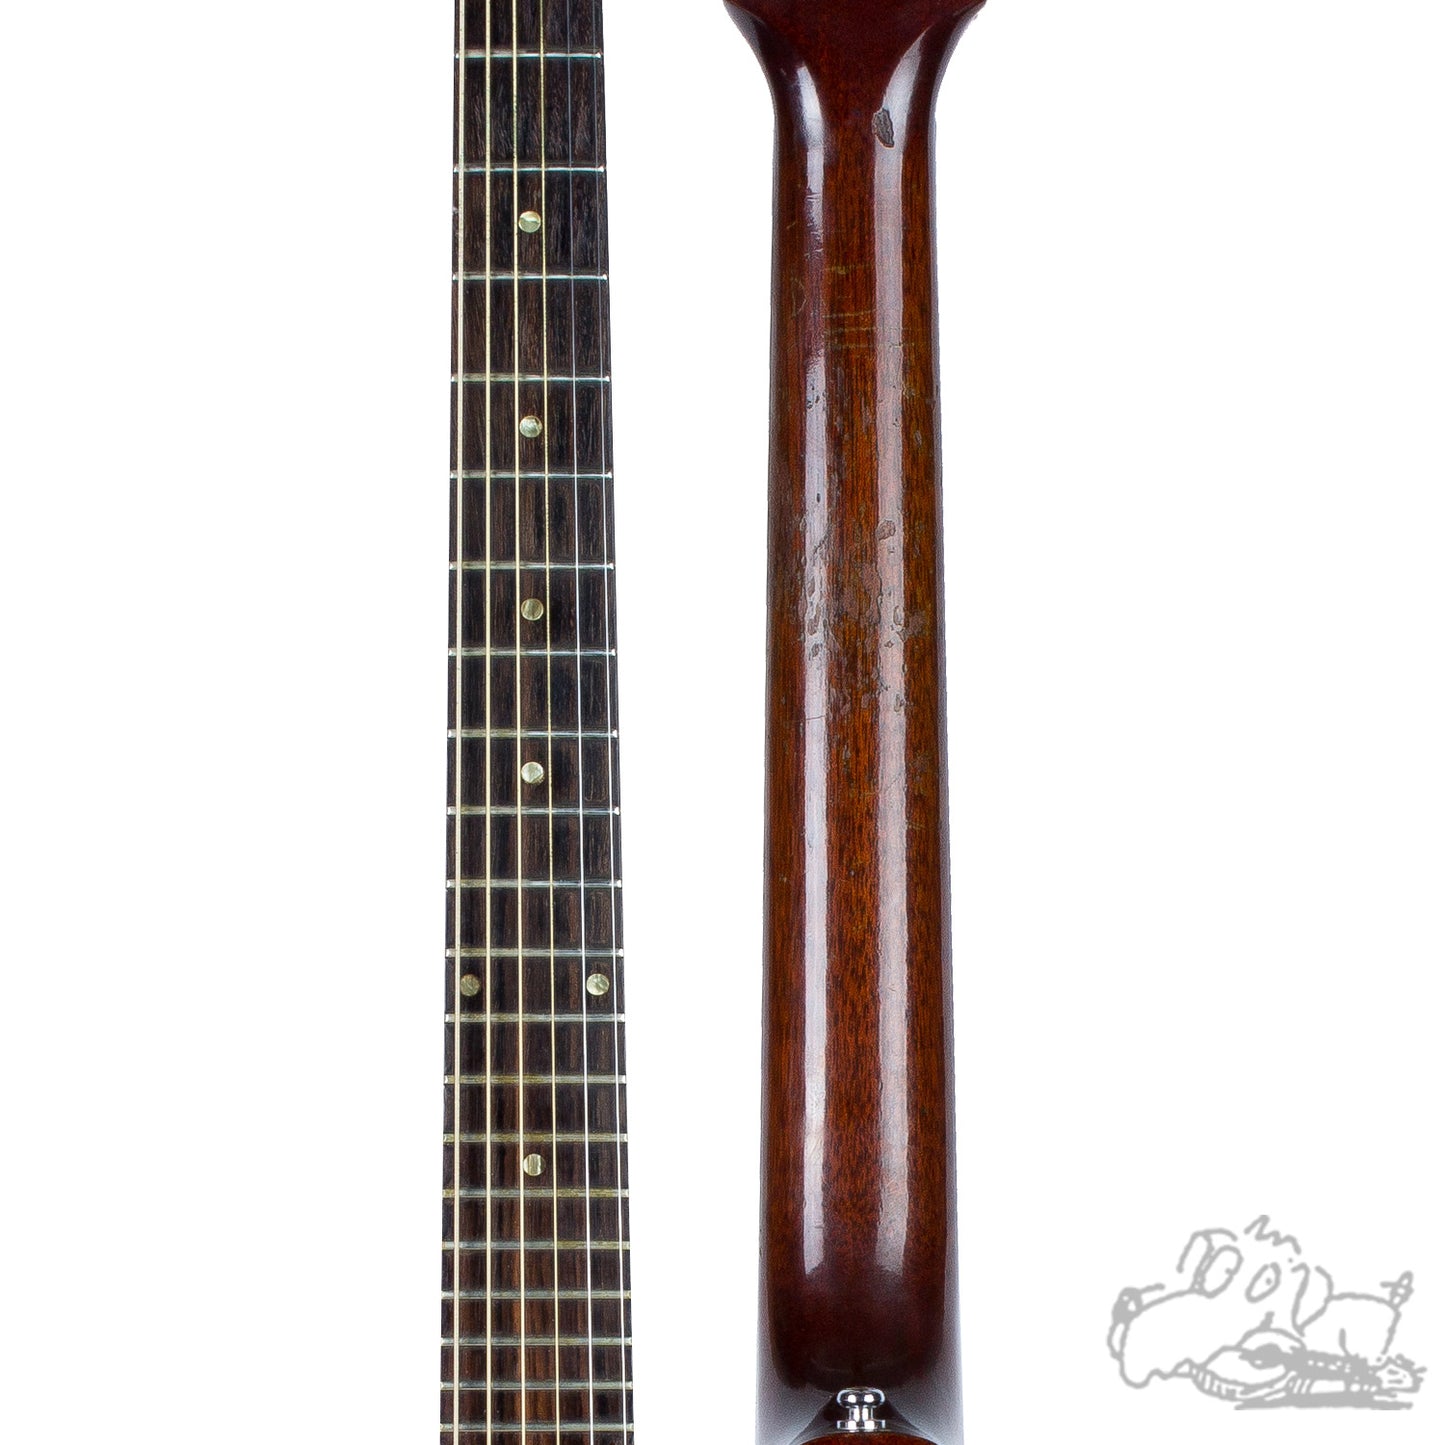 1965 Gibson J-45